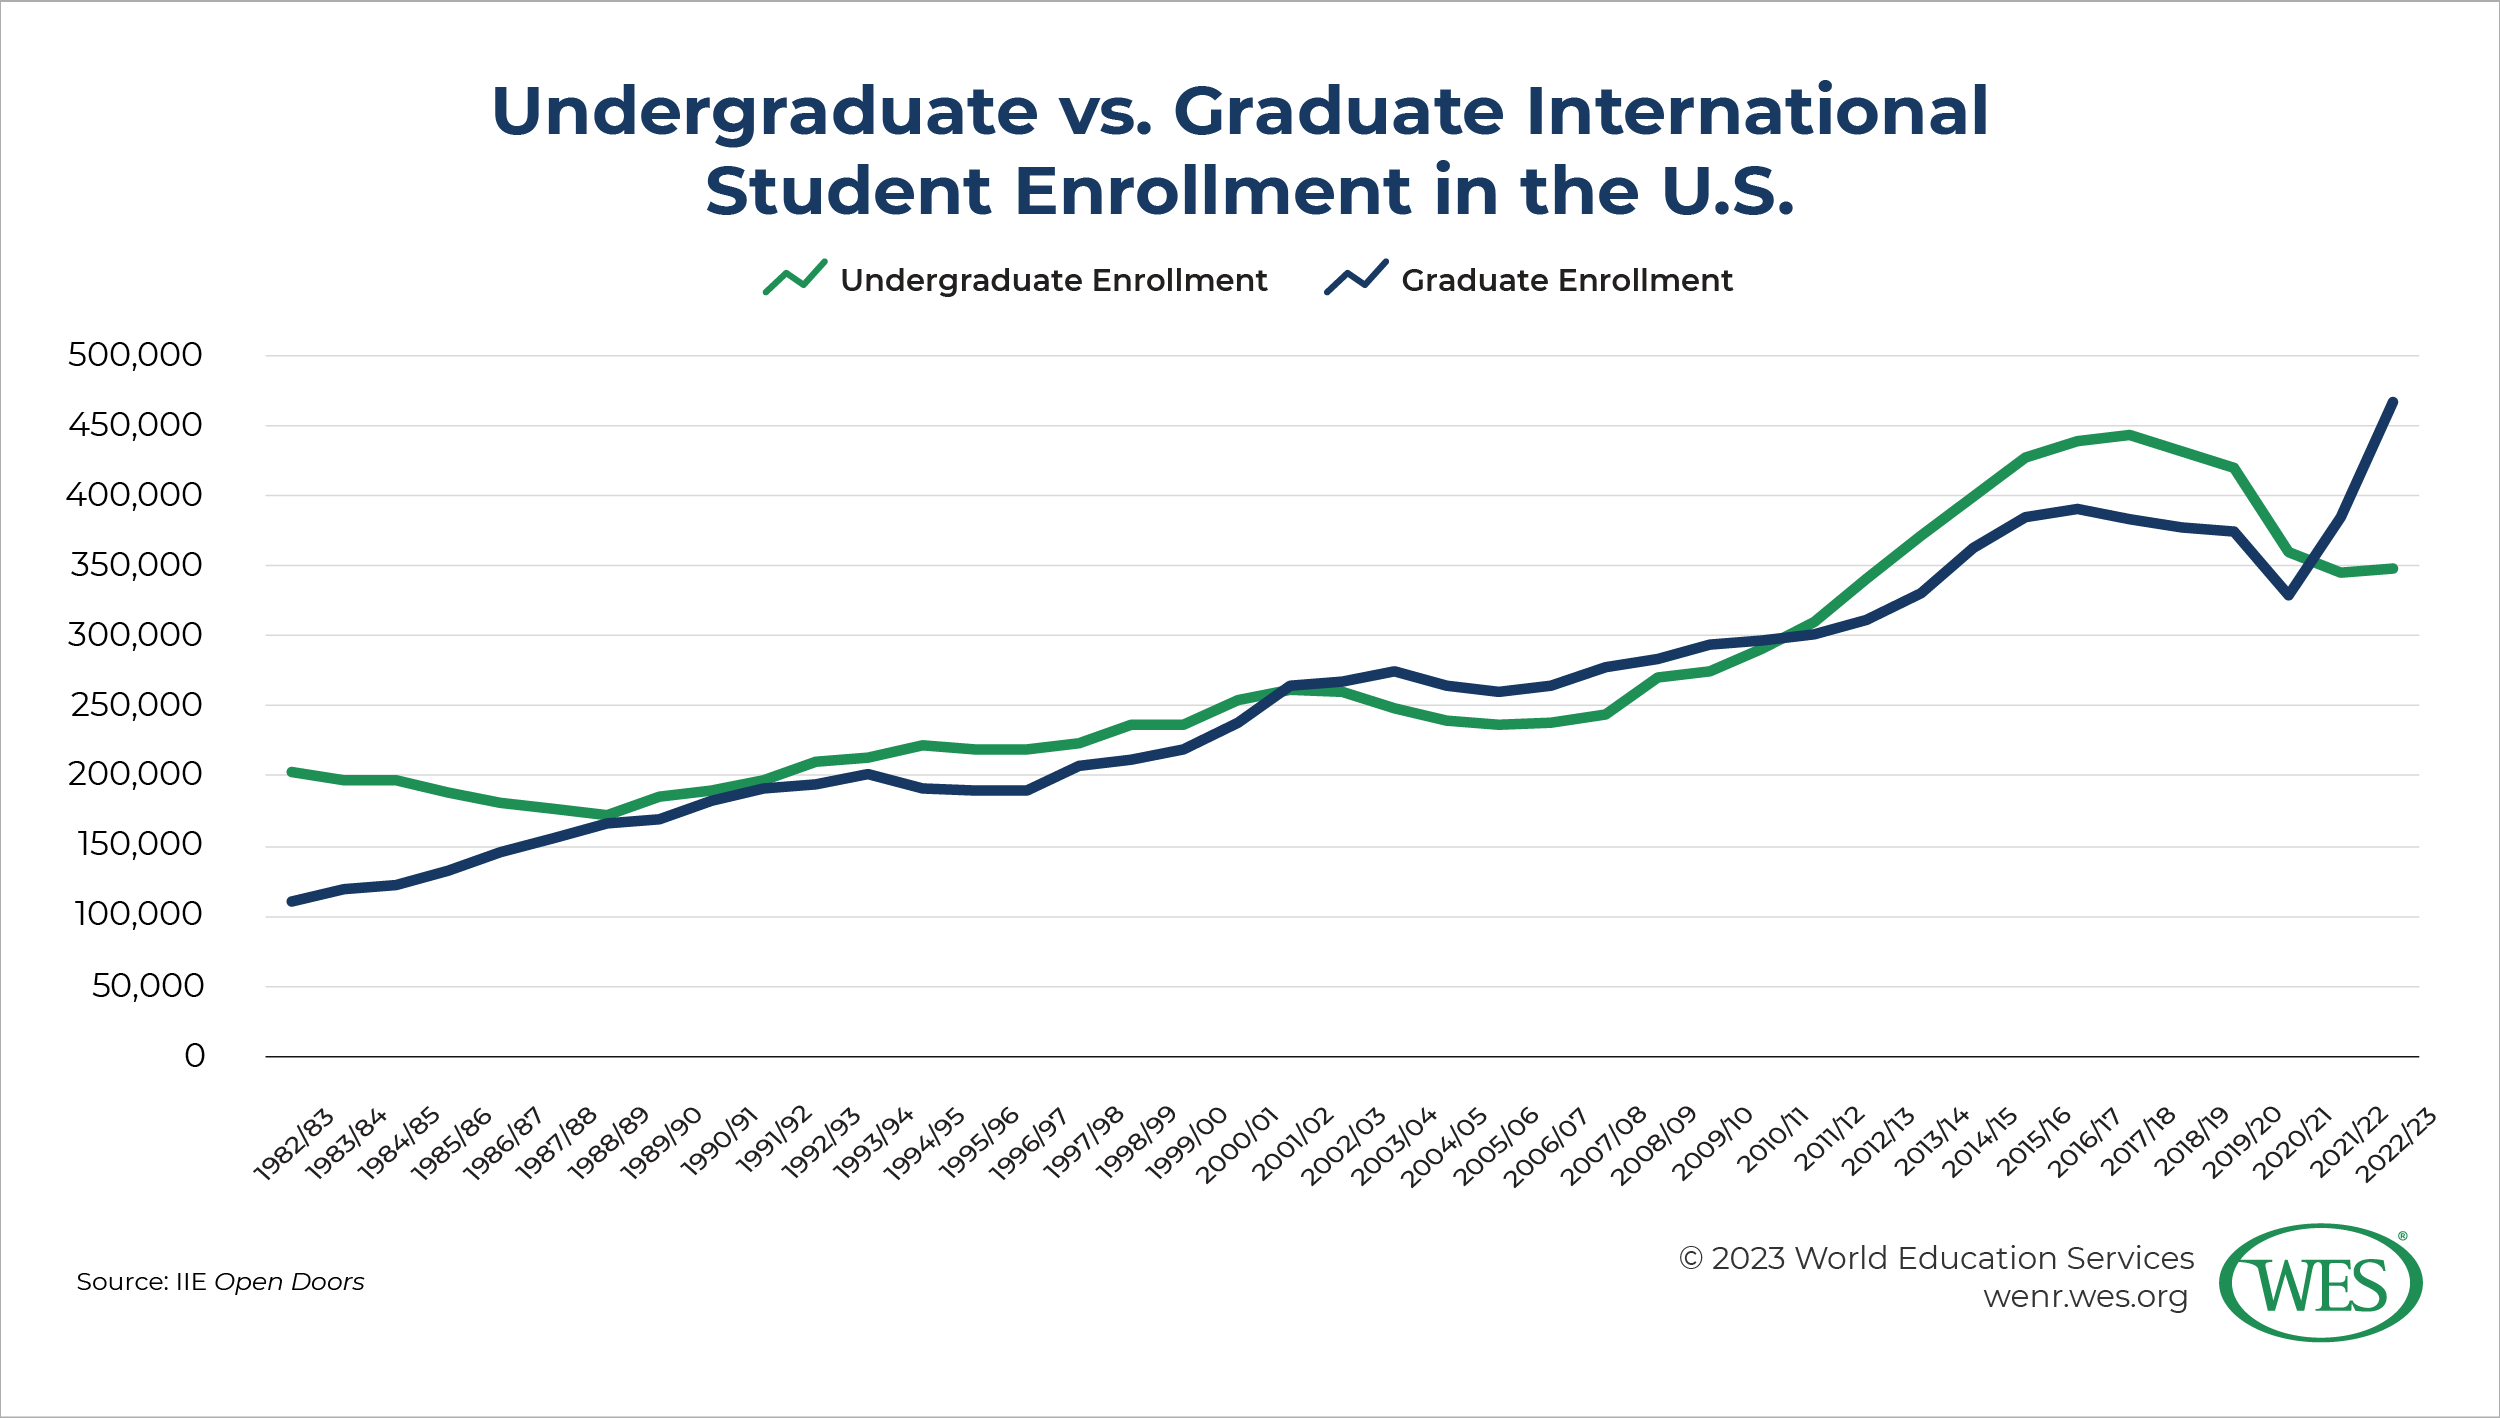 A chart showing undergraduate versus graduate international student enrollment in the U.S. between 1982/83 and 2022/23. 